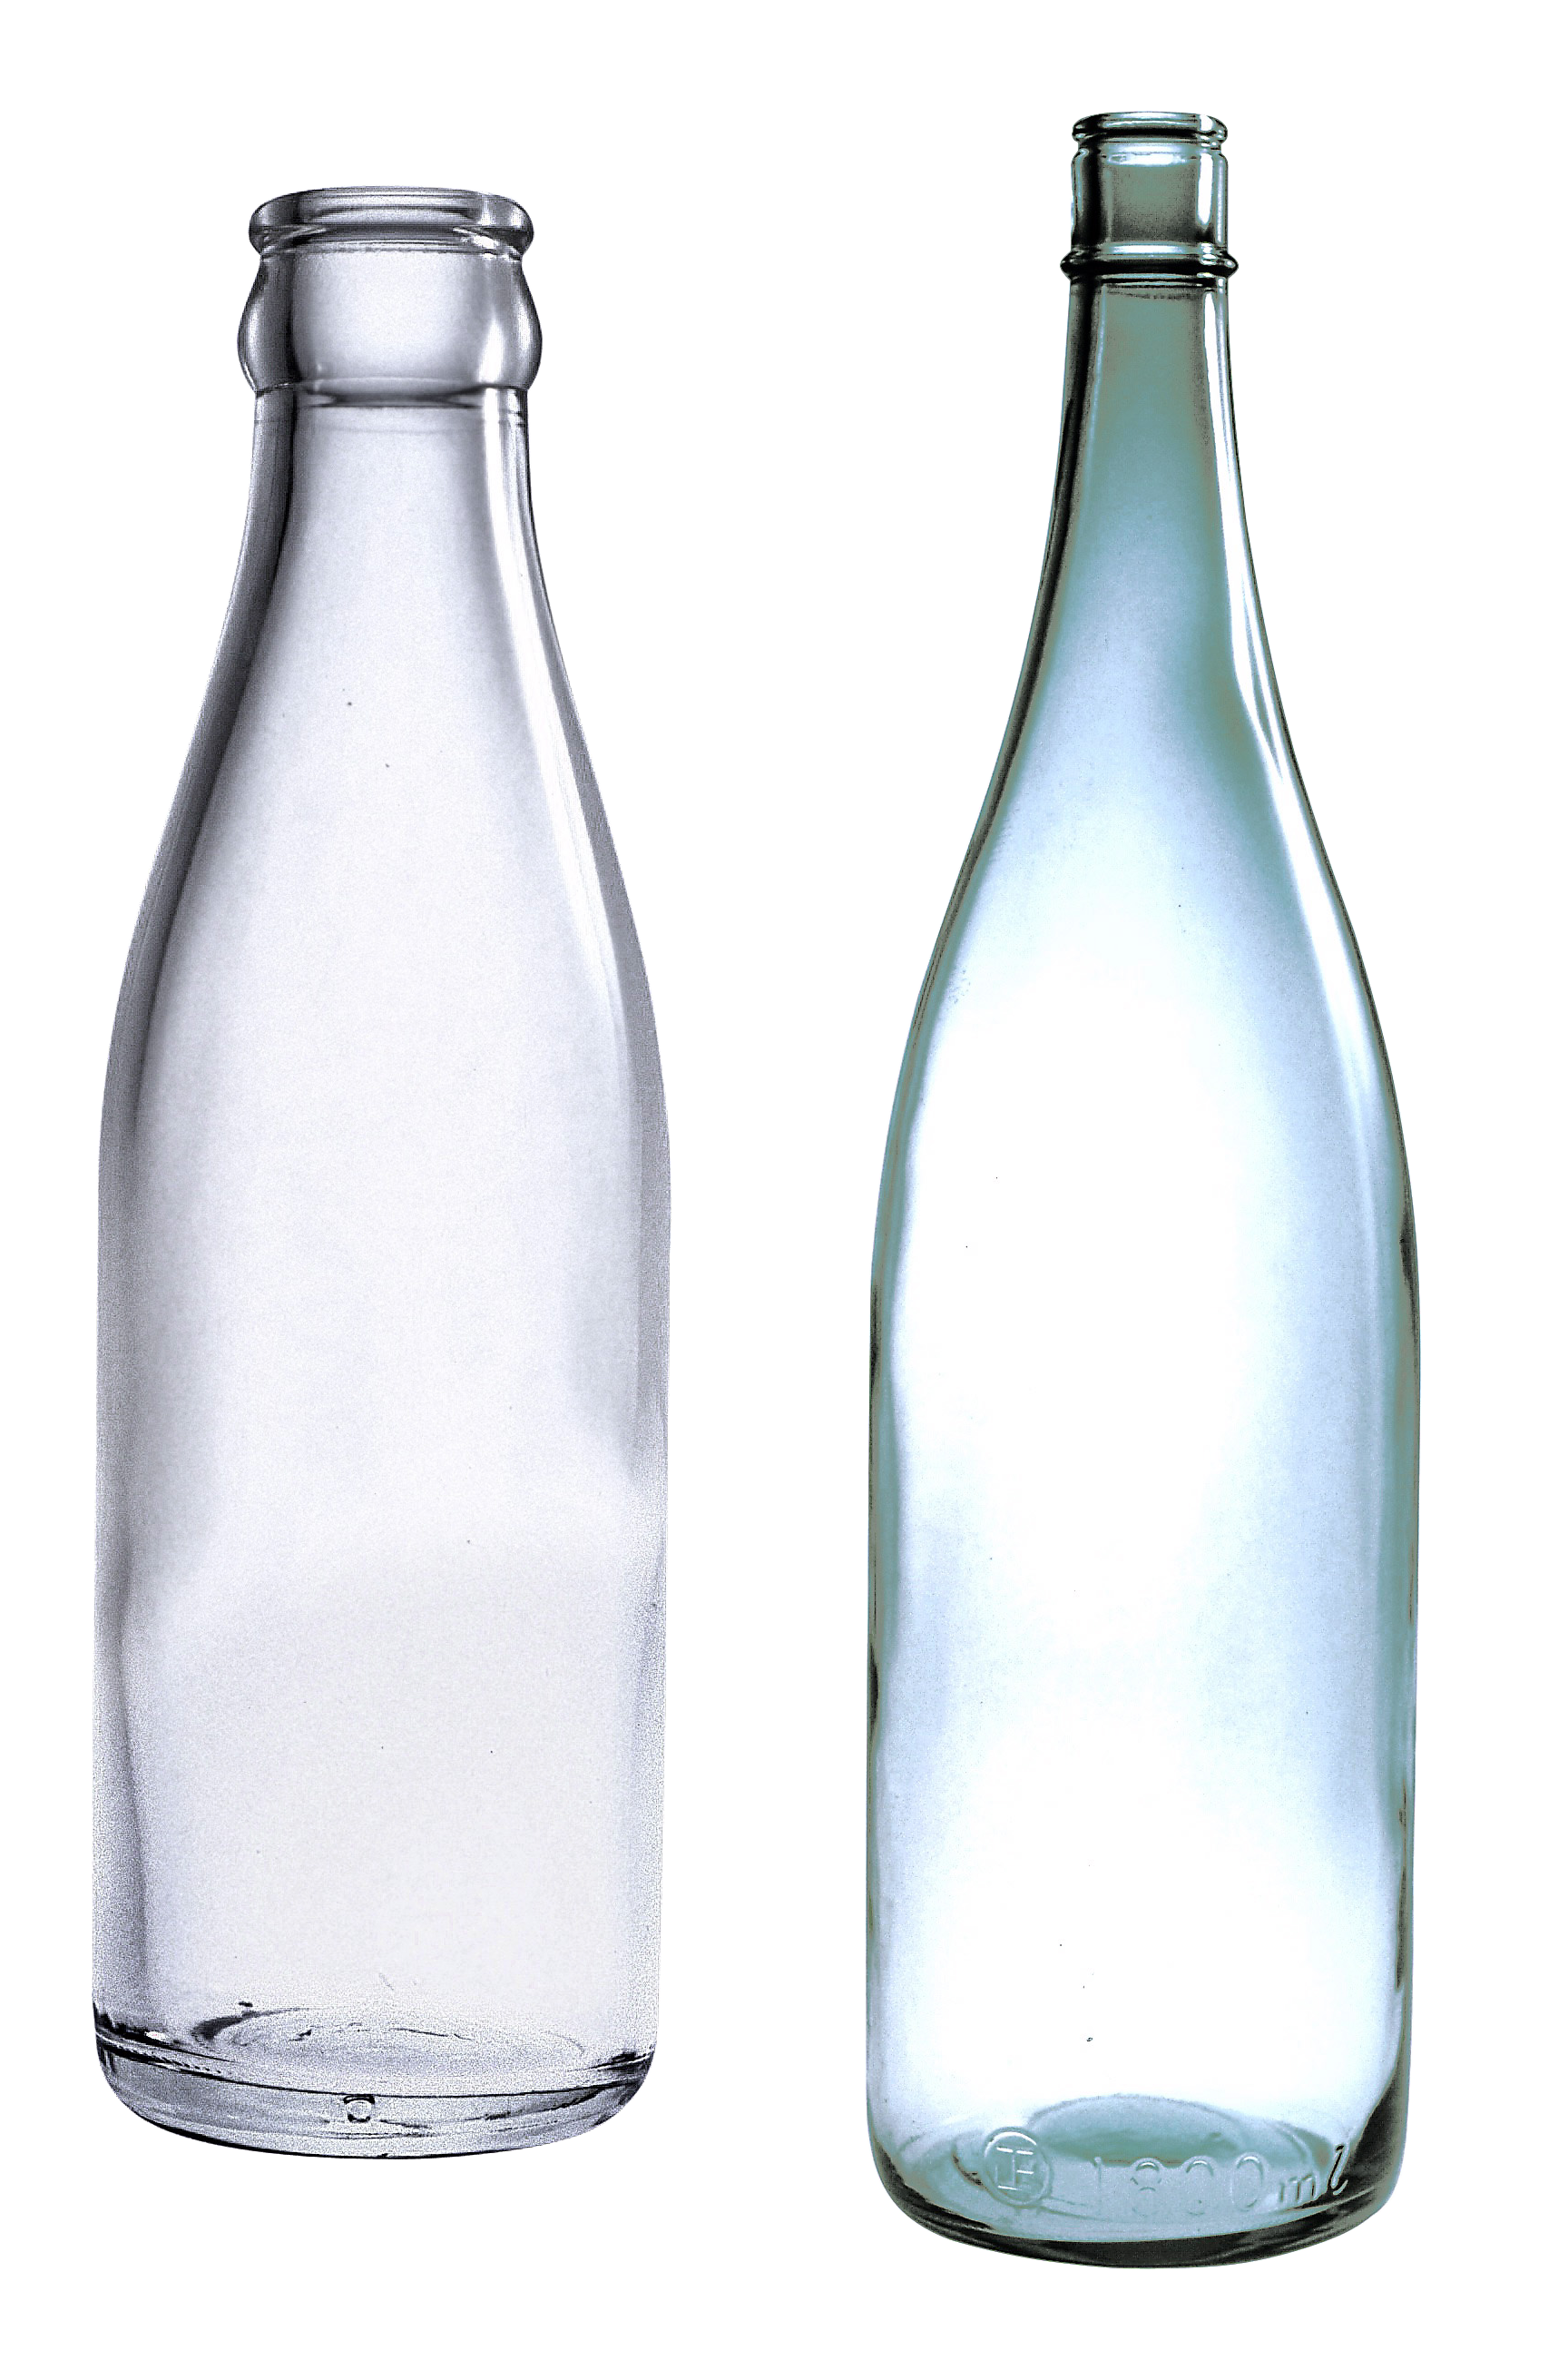 Glass Bottle Translucent PNG Image High Quality PNG Image